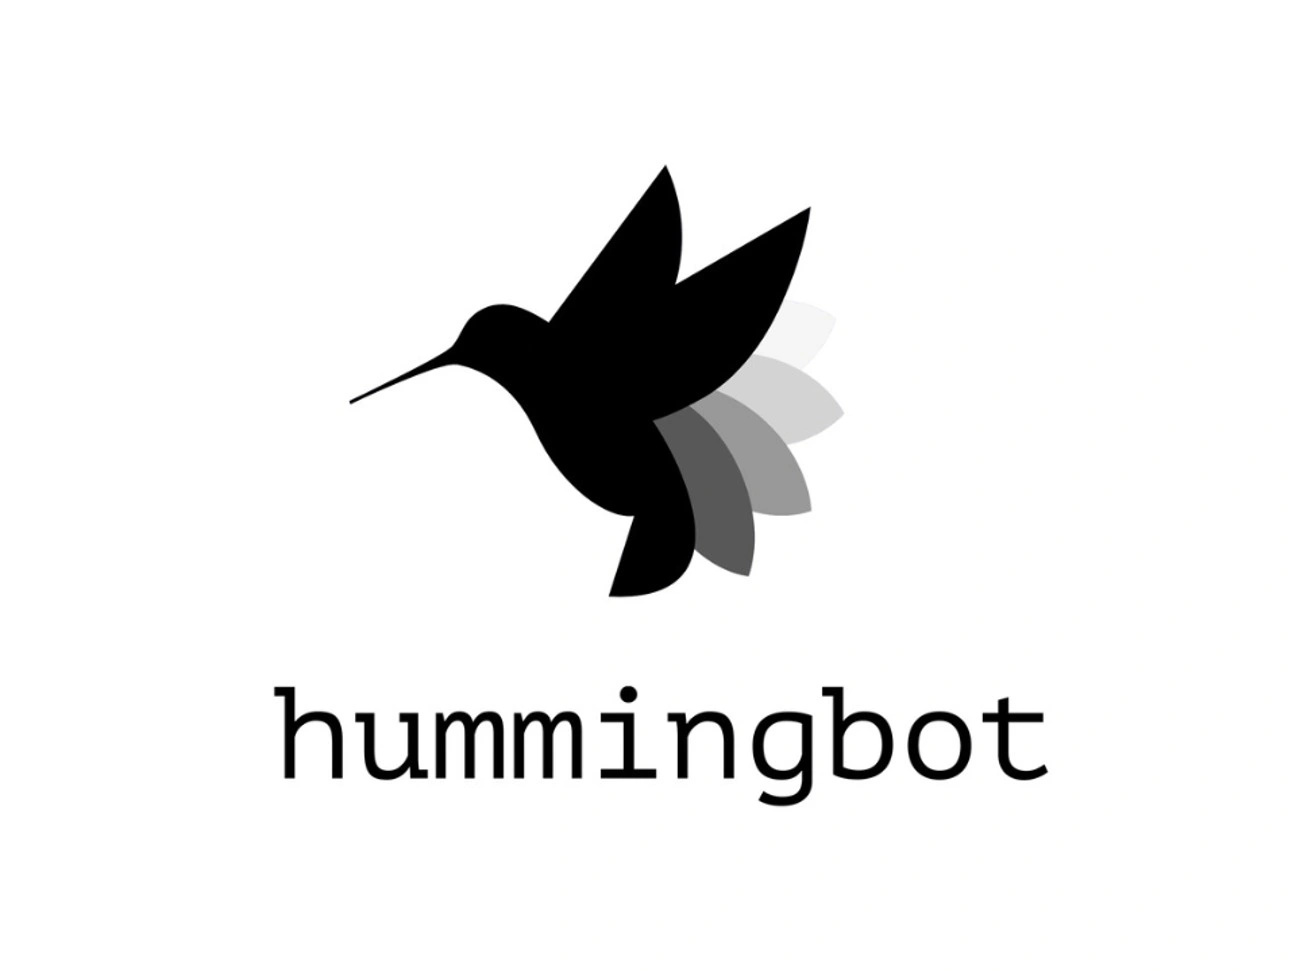 Hummingbot